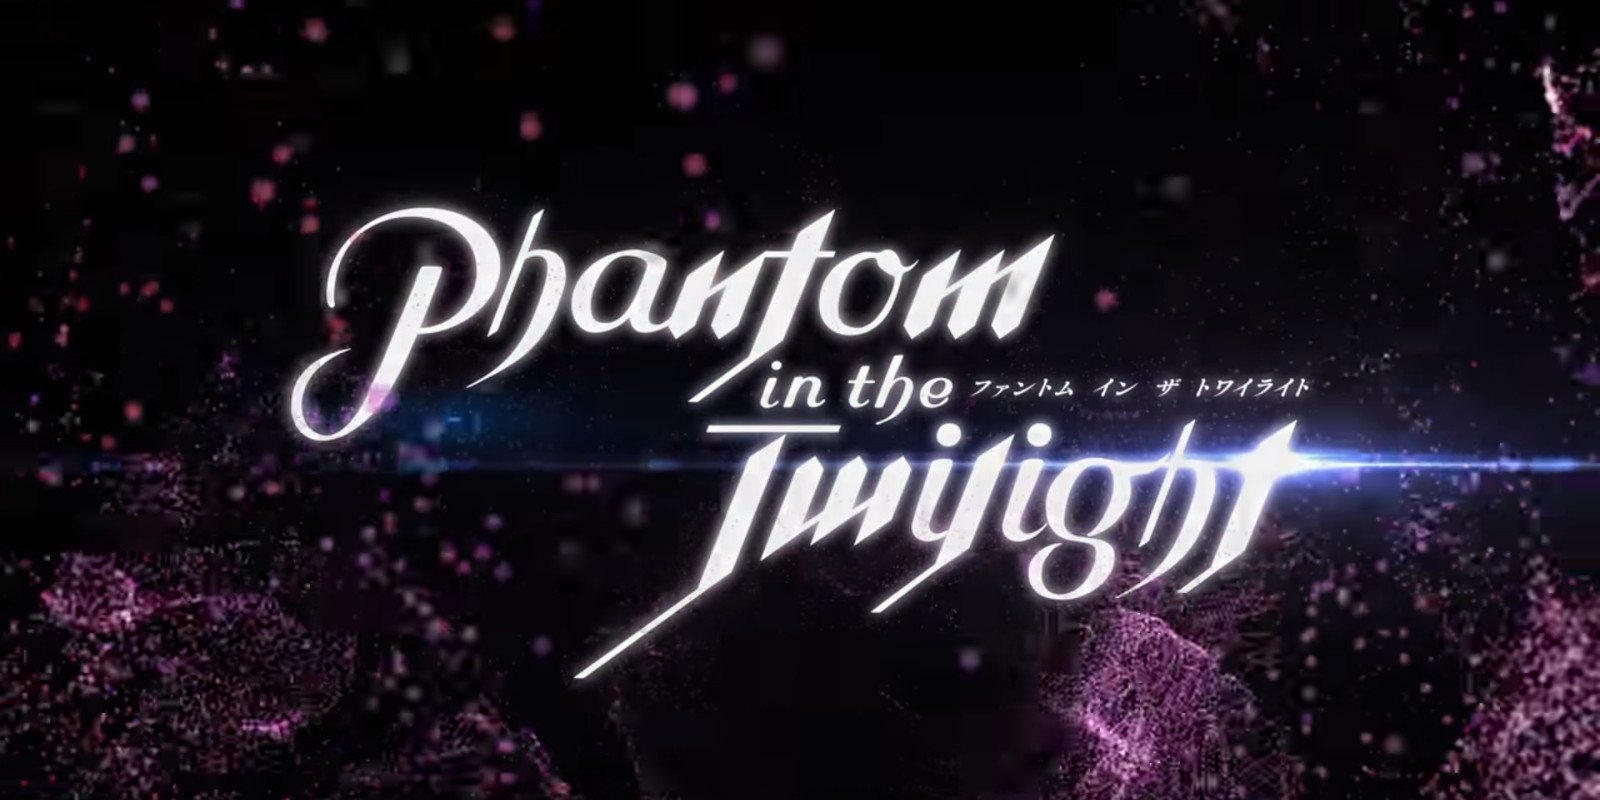 'Phantom in the Twilight' estrena teaser dedicado a Tauryu